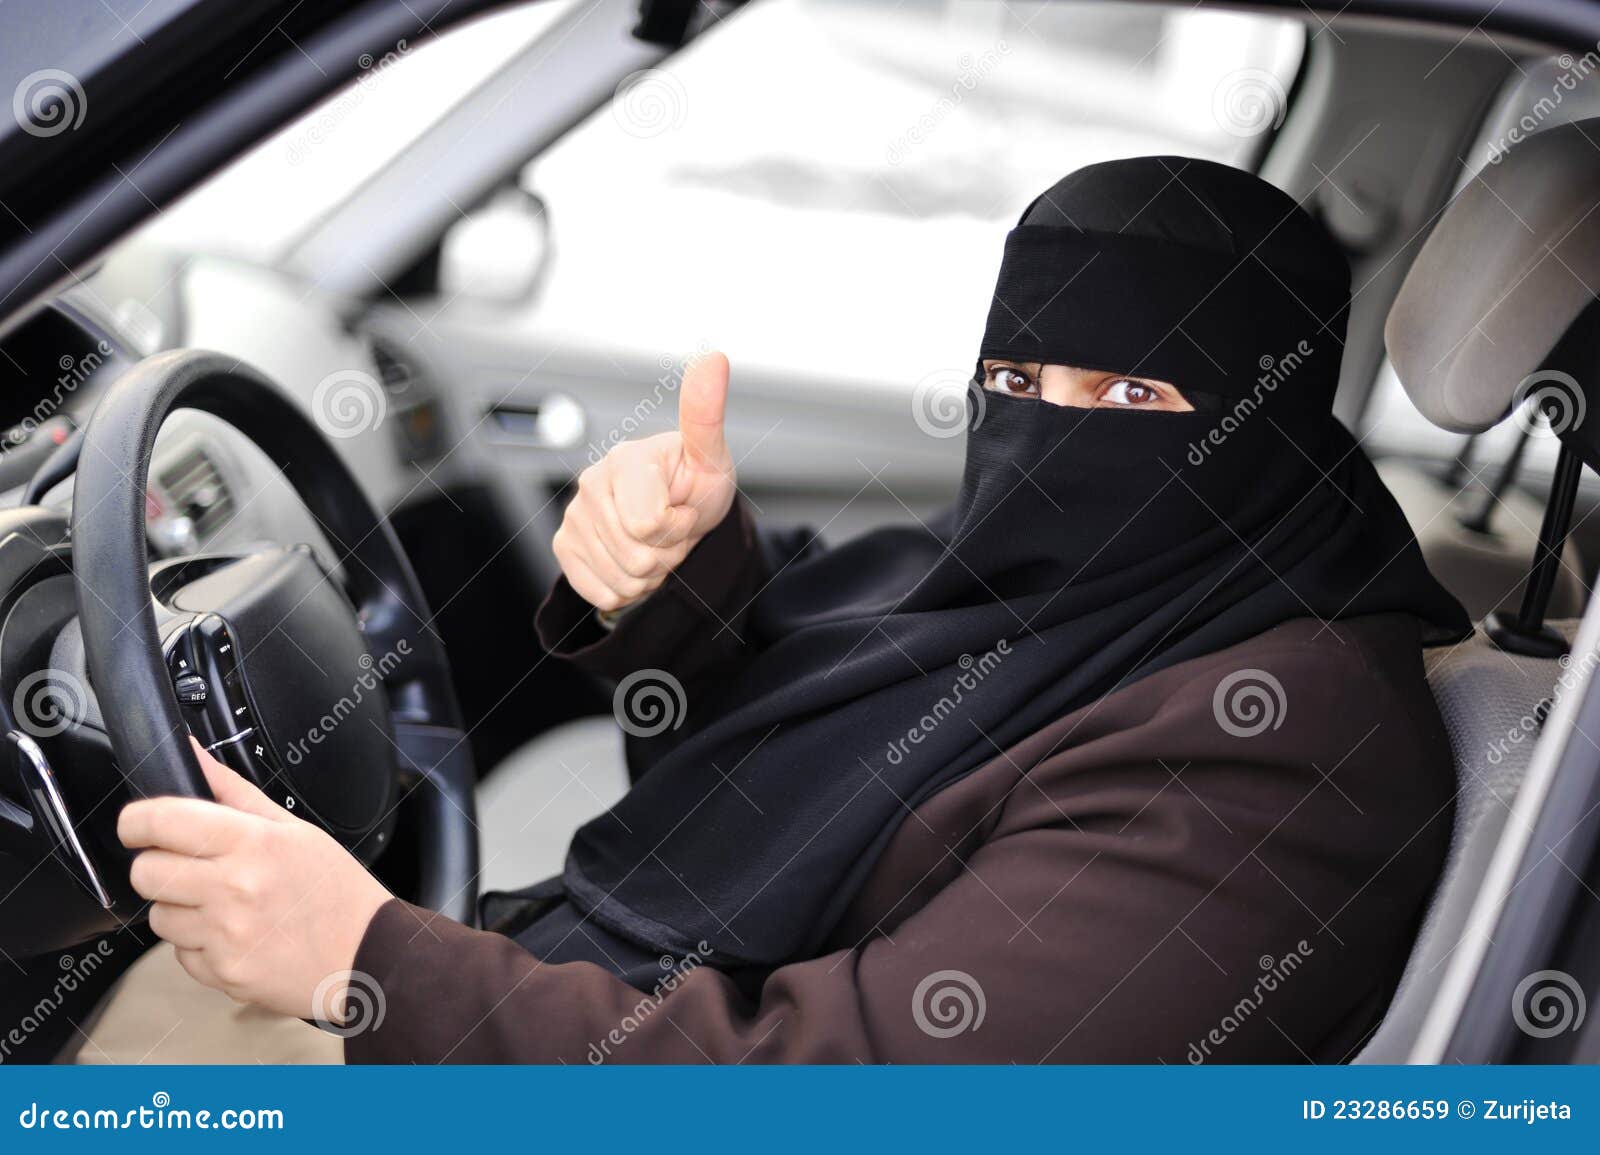 arabic muslim woman driving car 23286659